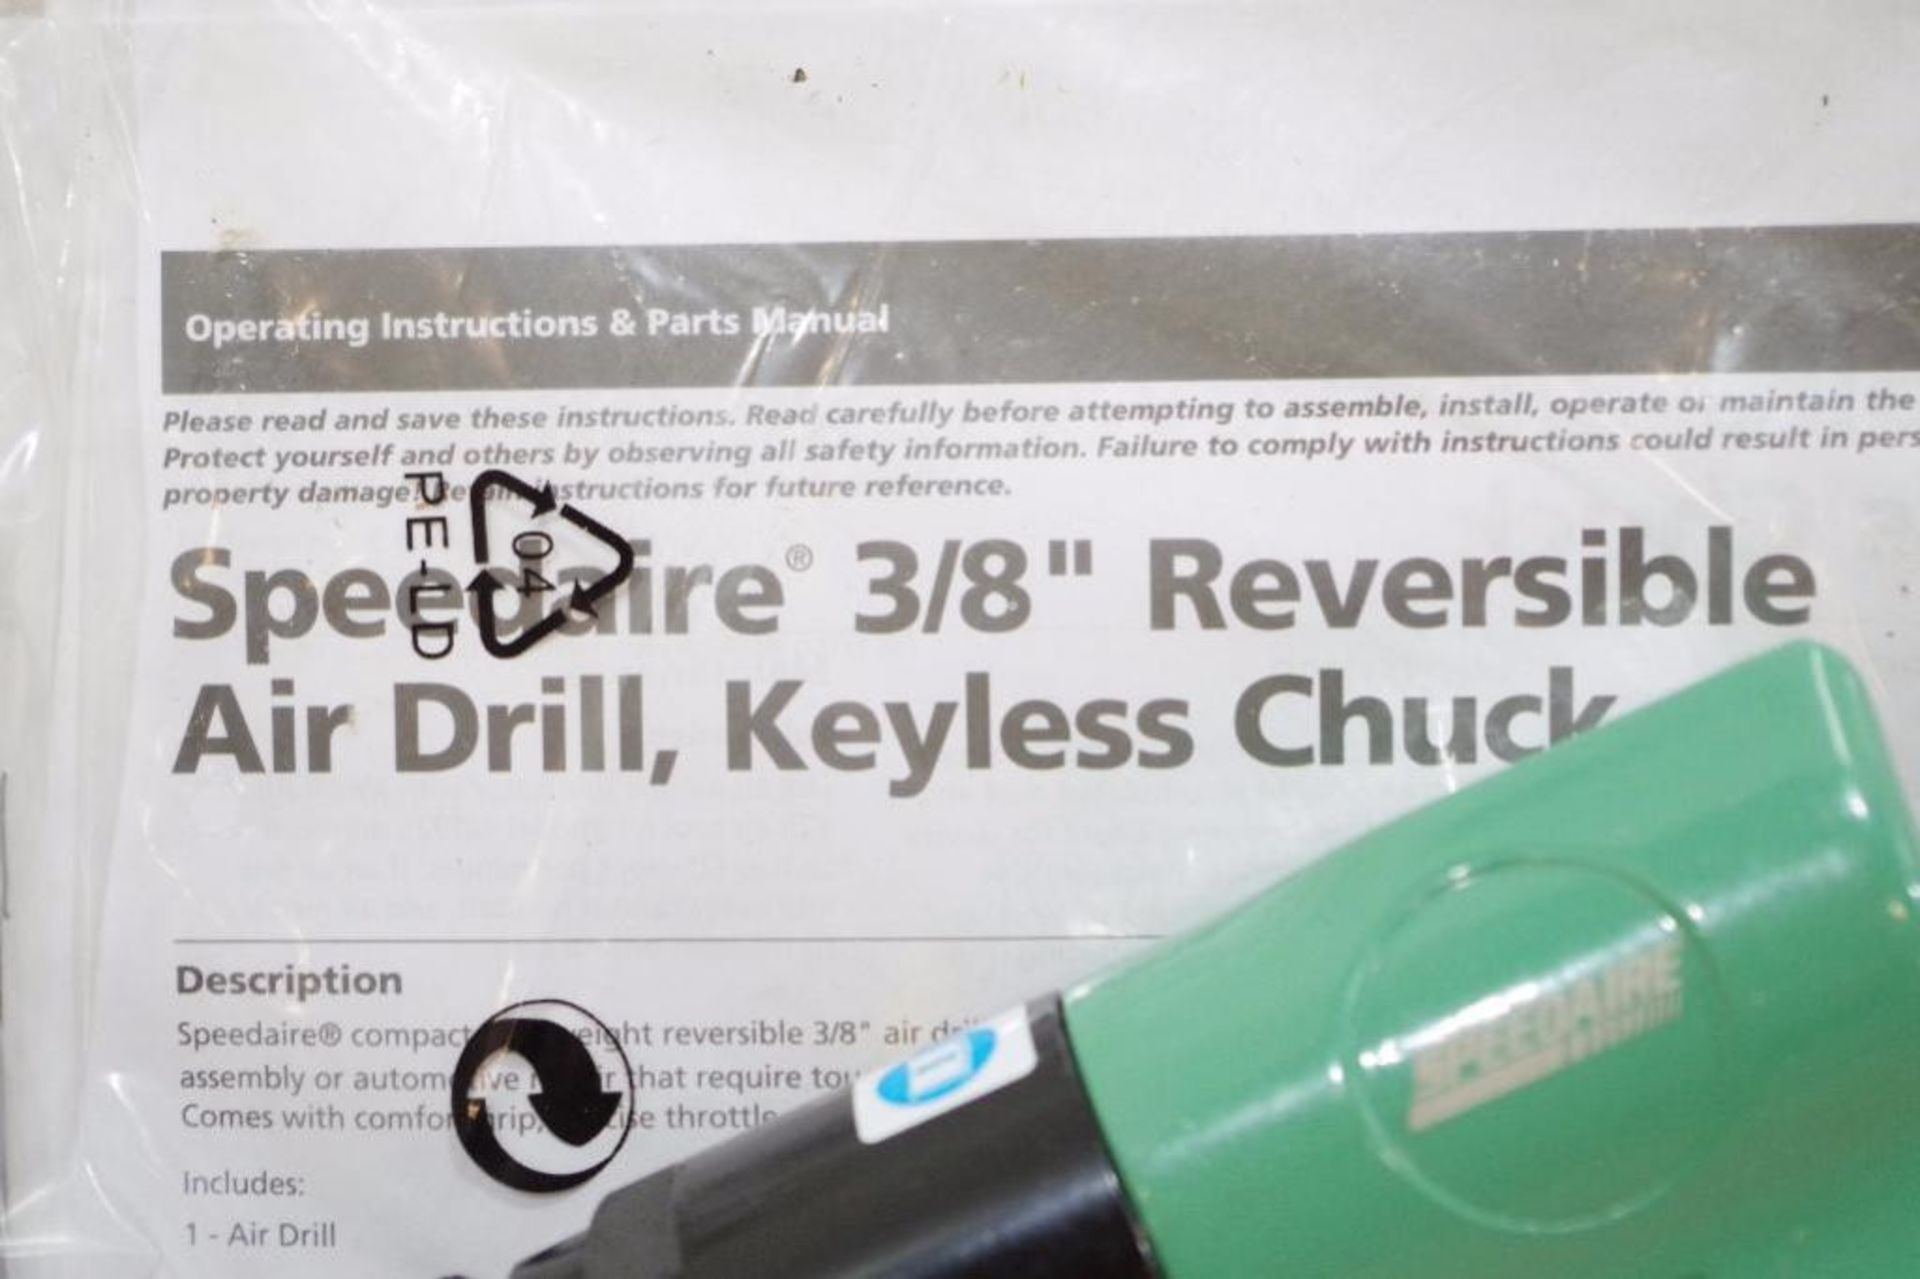 UNUSED SPEEDAIRE 3/8" Reversible Air Drill, Leyless Chuck - Image 2 of 4